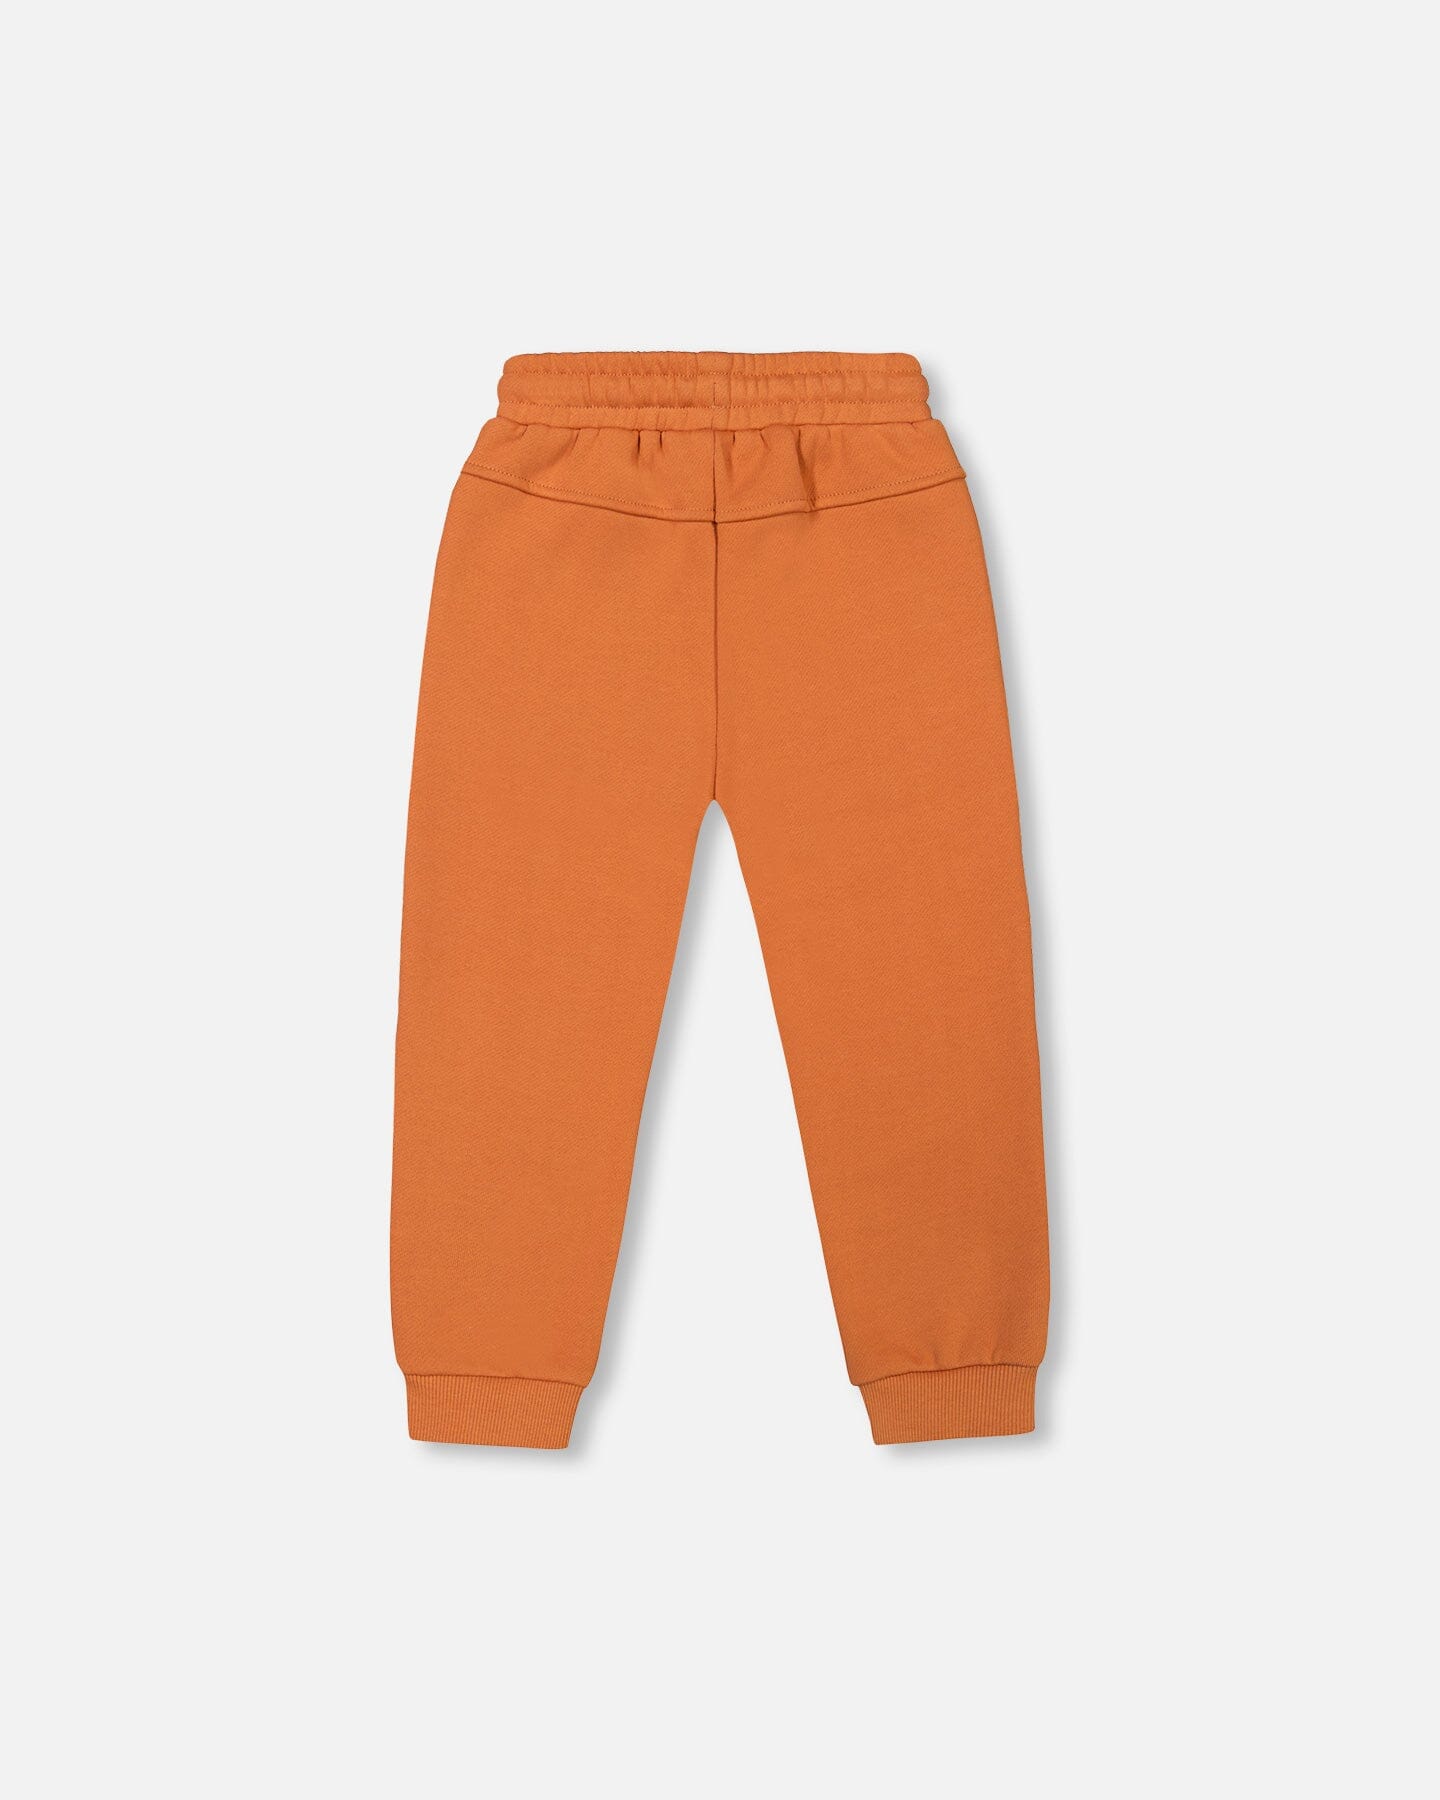 Fleece Sweatpants With Zipper Pockets Brown-Orange - F20U21_959